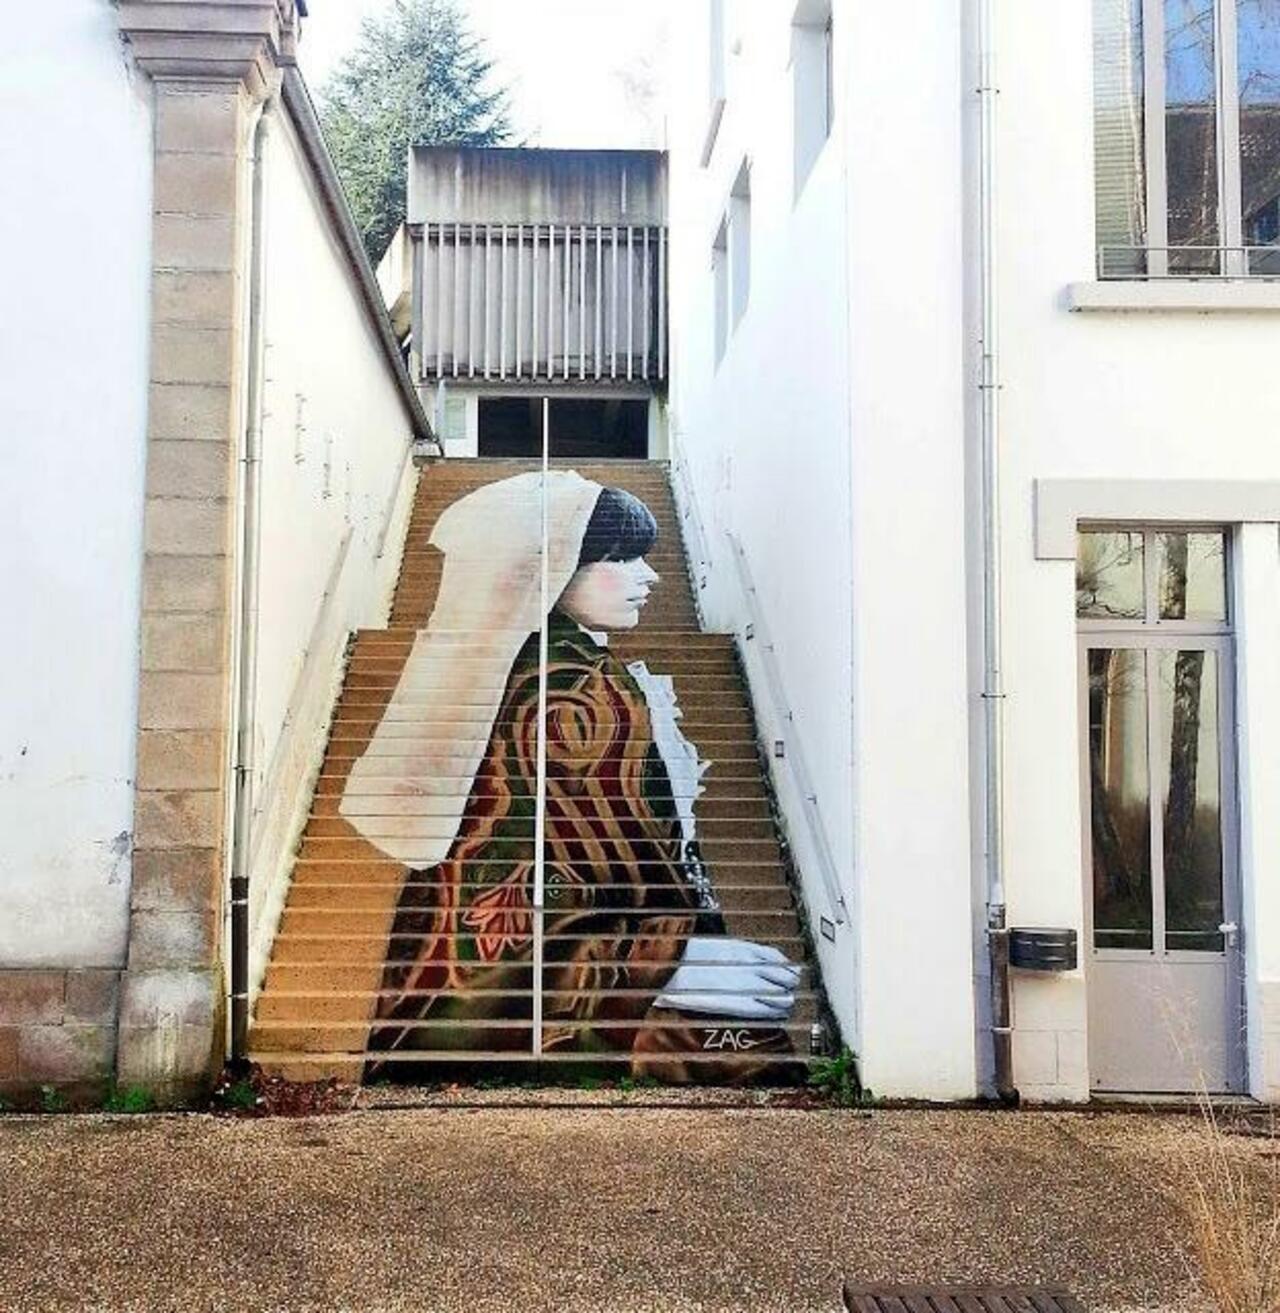 “@Pitchuskita: ZAG 
Morlaix, France

#streetart #art #graffiti http://t.co/iPZoiPgK2b” that's fantastic